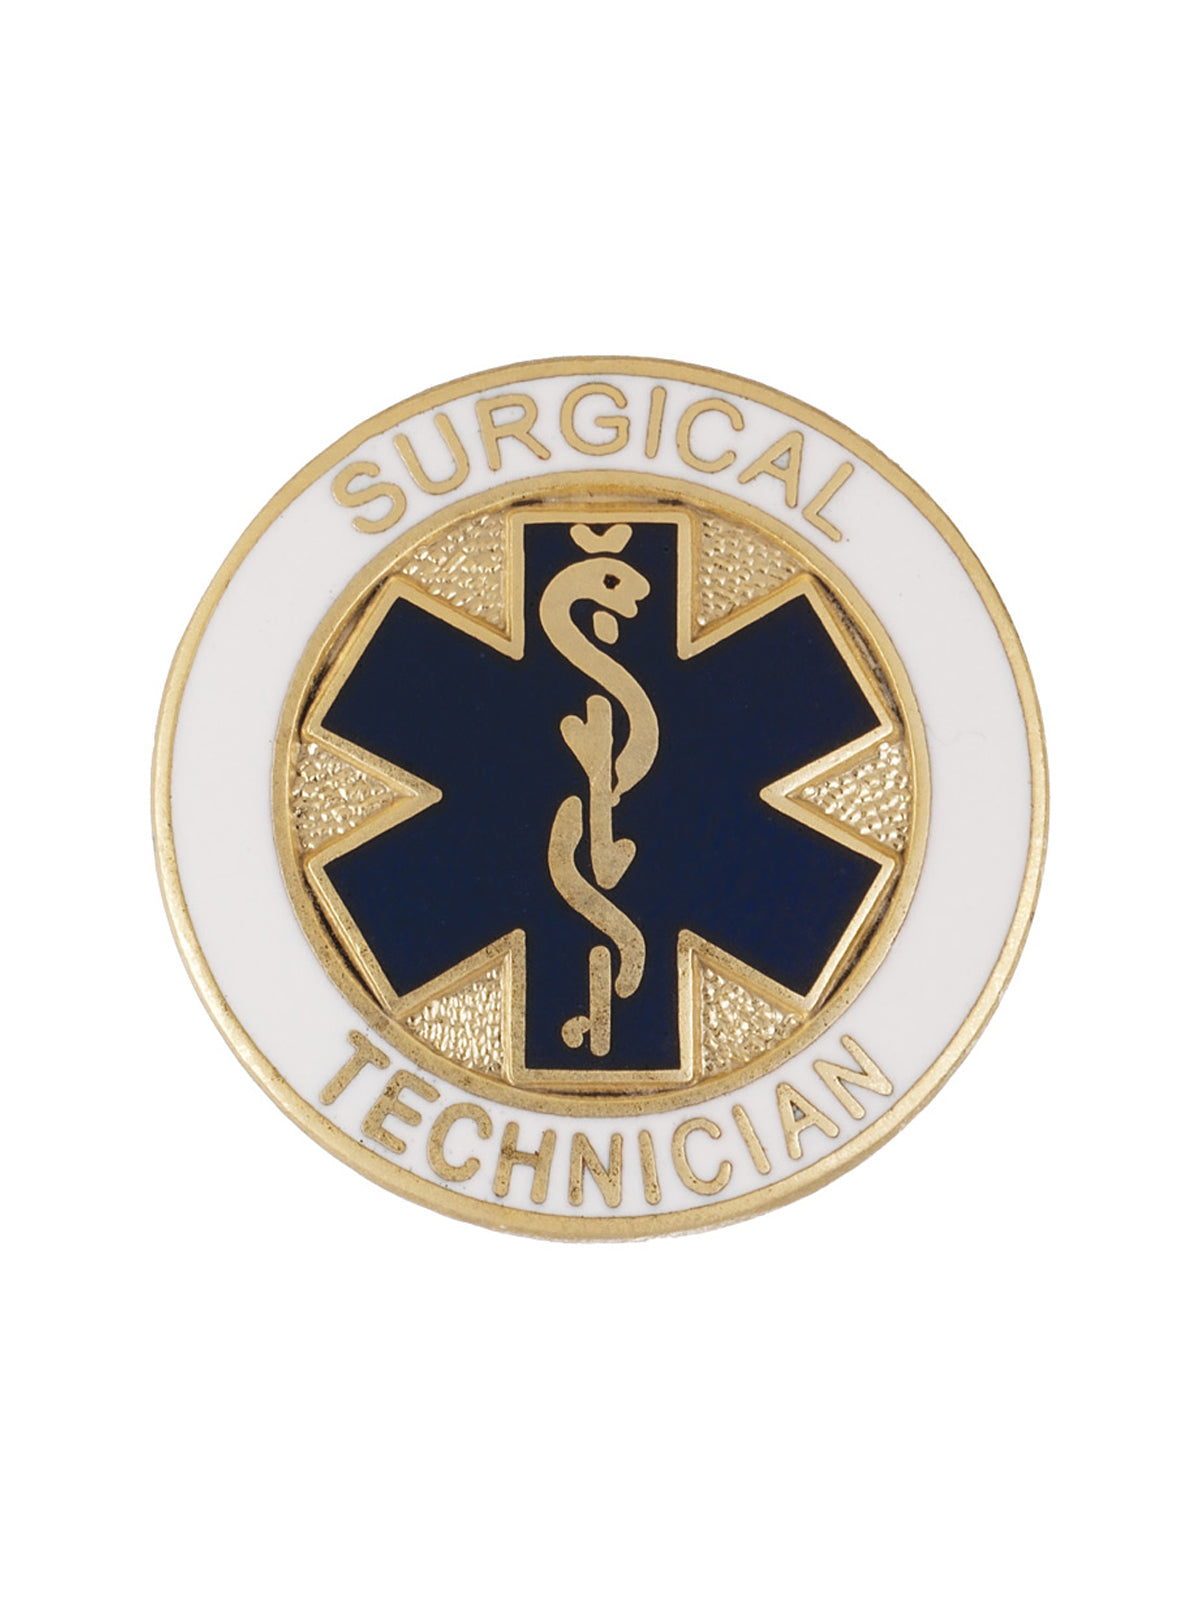 Surgical Technician Cloisonne Pin - 2088 - Standard